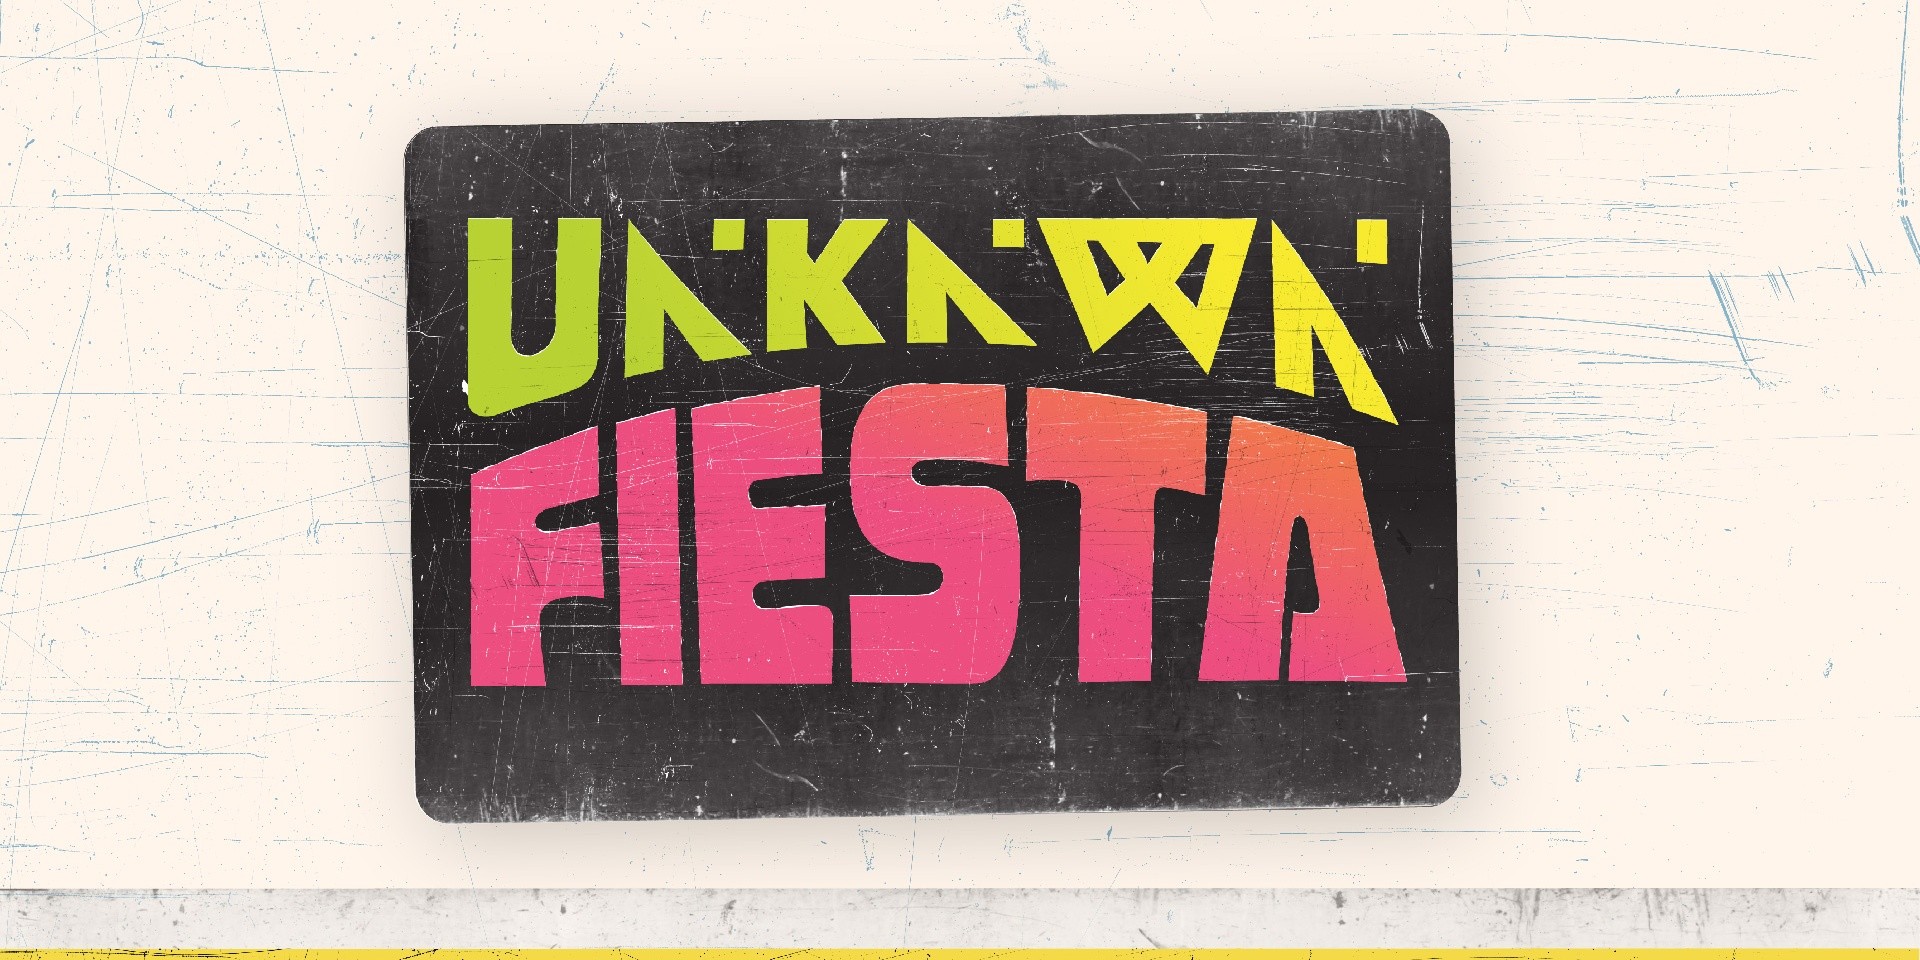 UNKNWN.Fiesta has been postponed